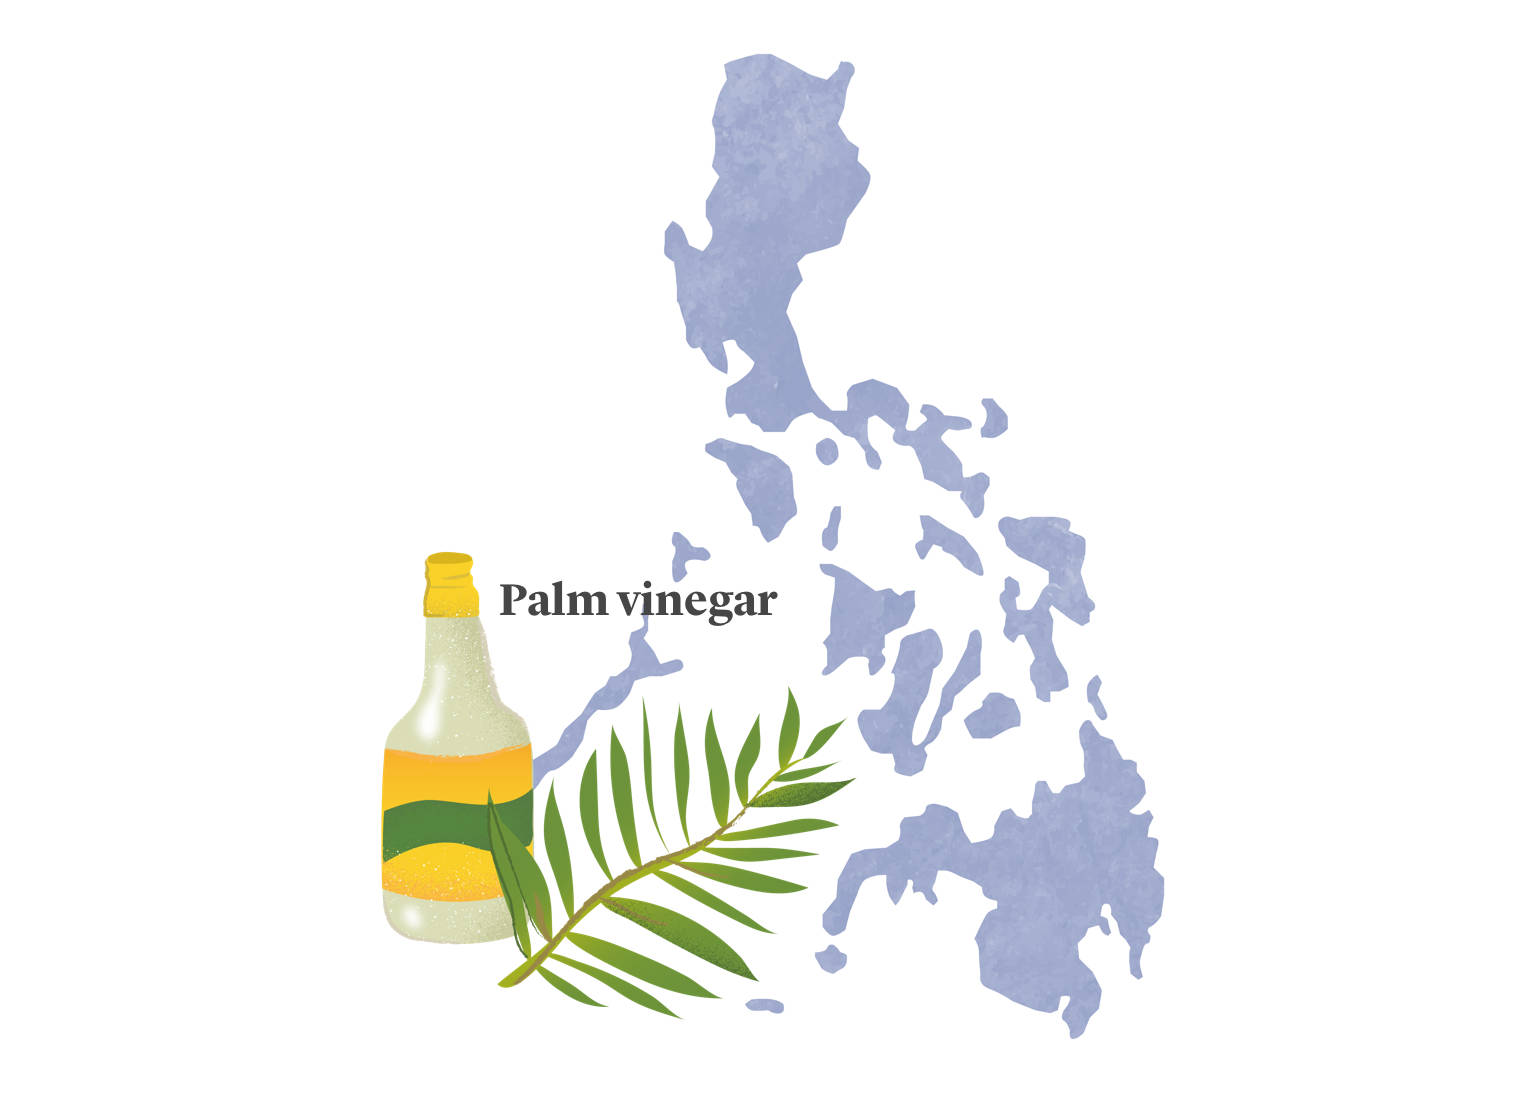 Asian Spices Philippines Palm Vinegar Wallpaper